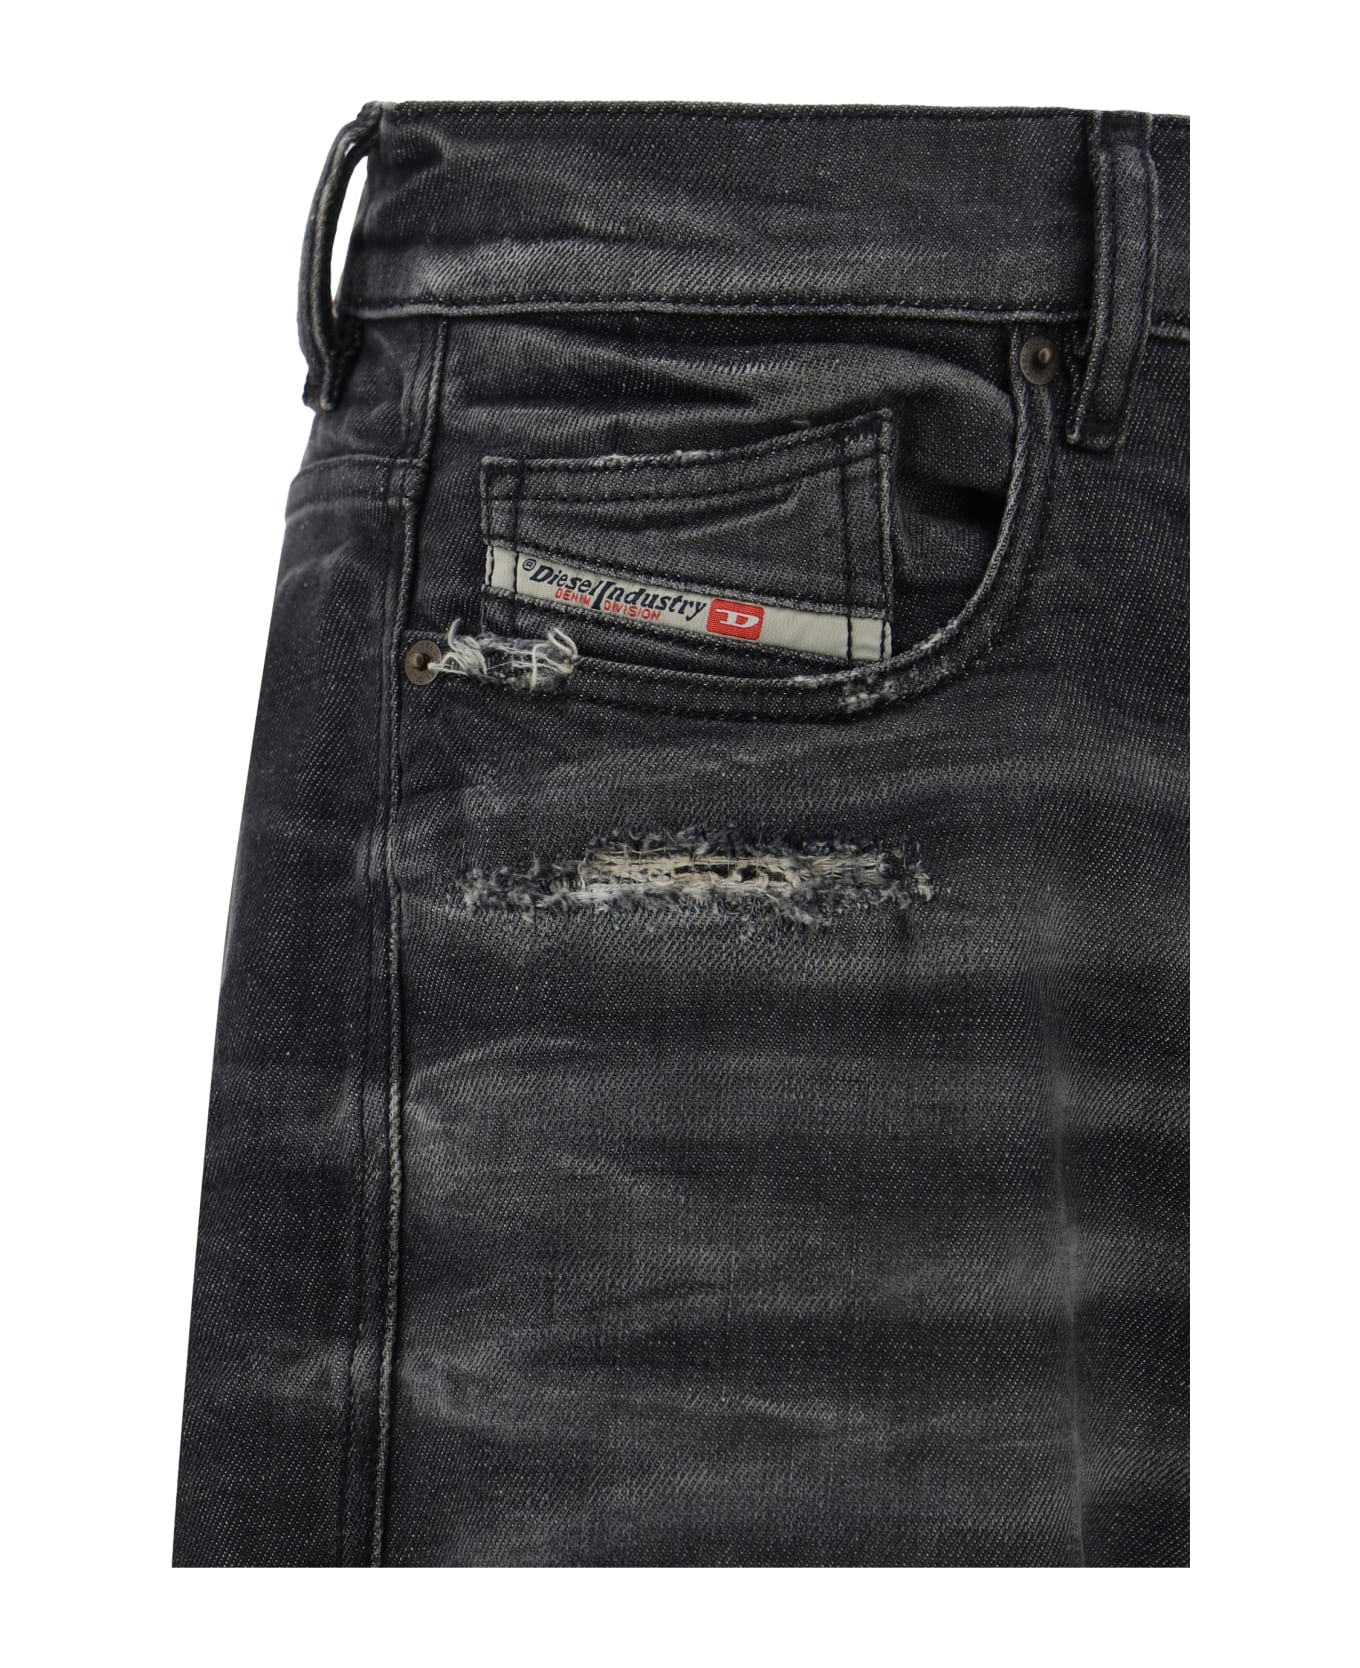 Diesel 2020 D-viker Jeans - 008 - Black/denim